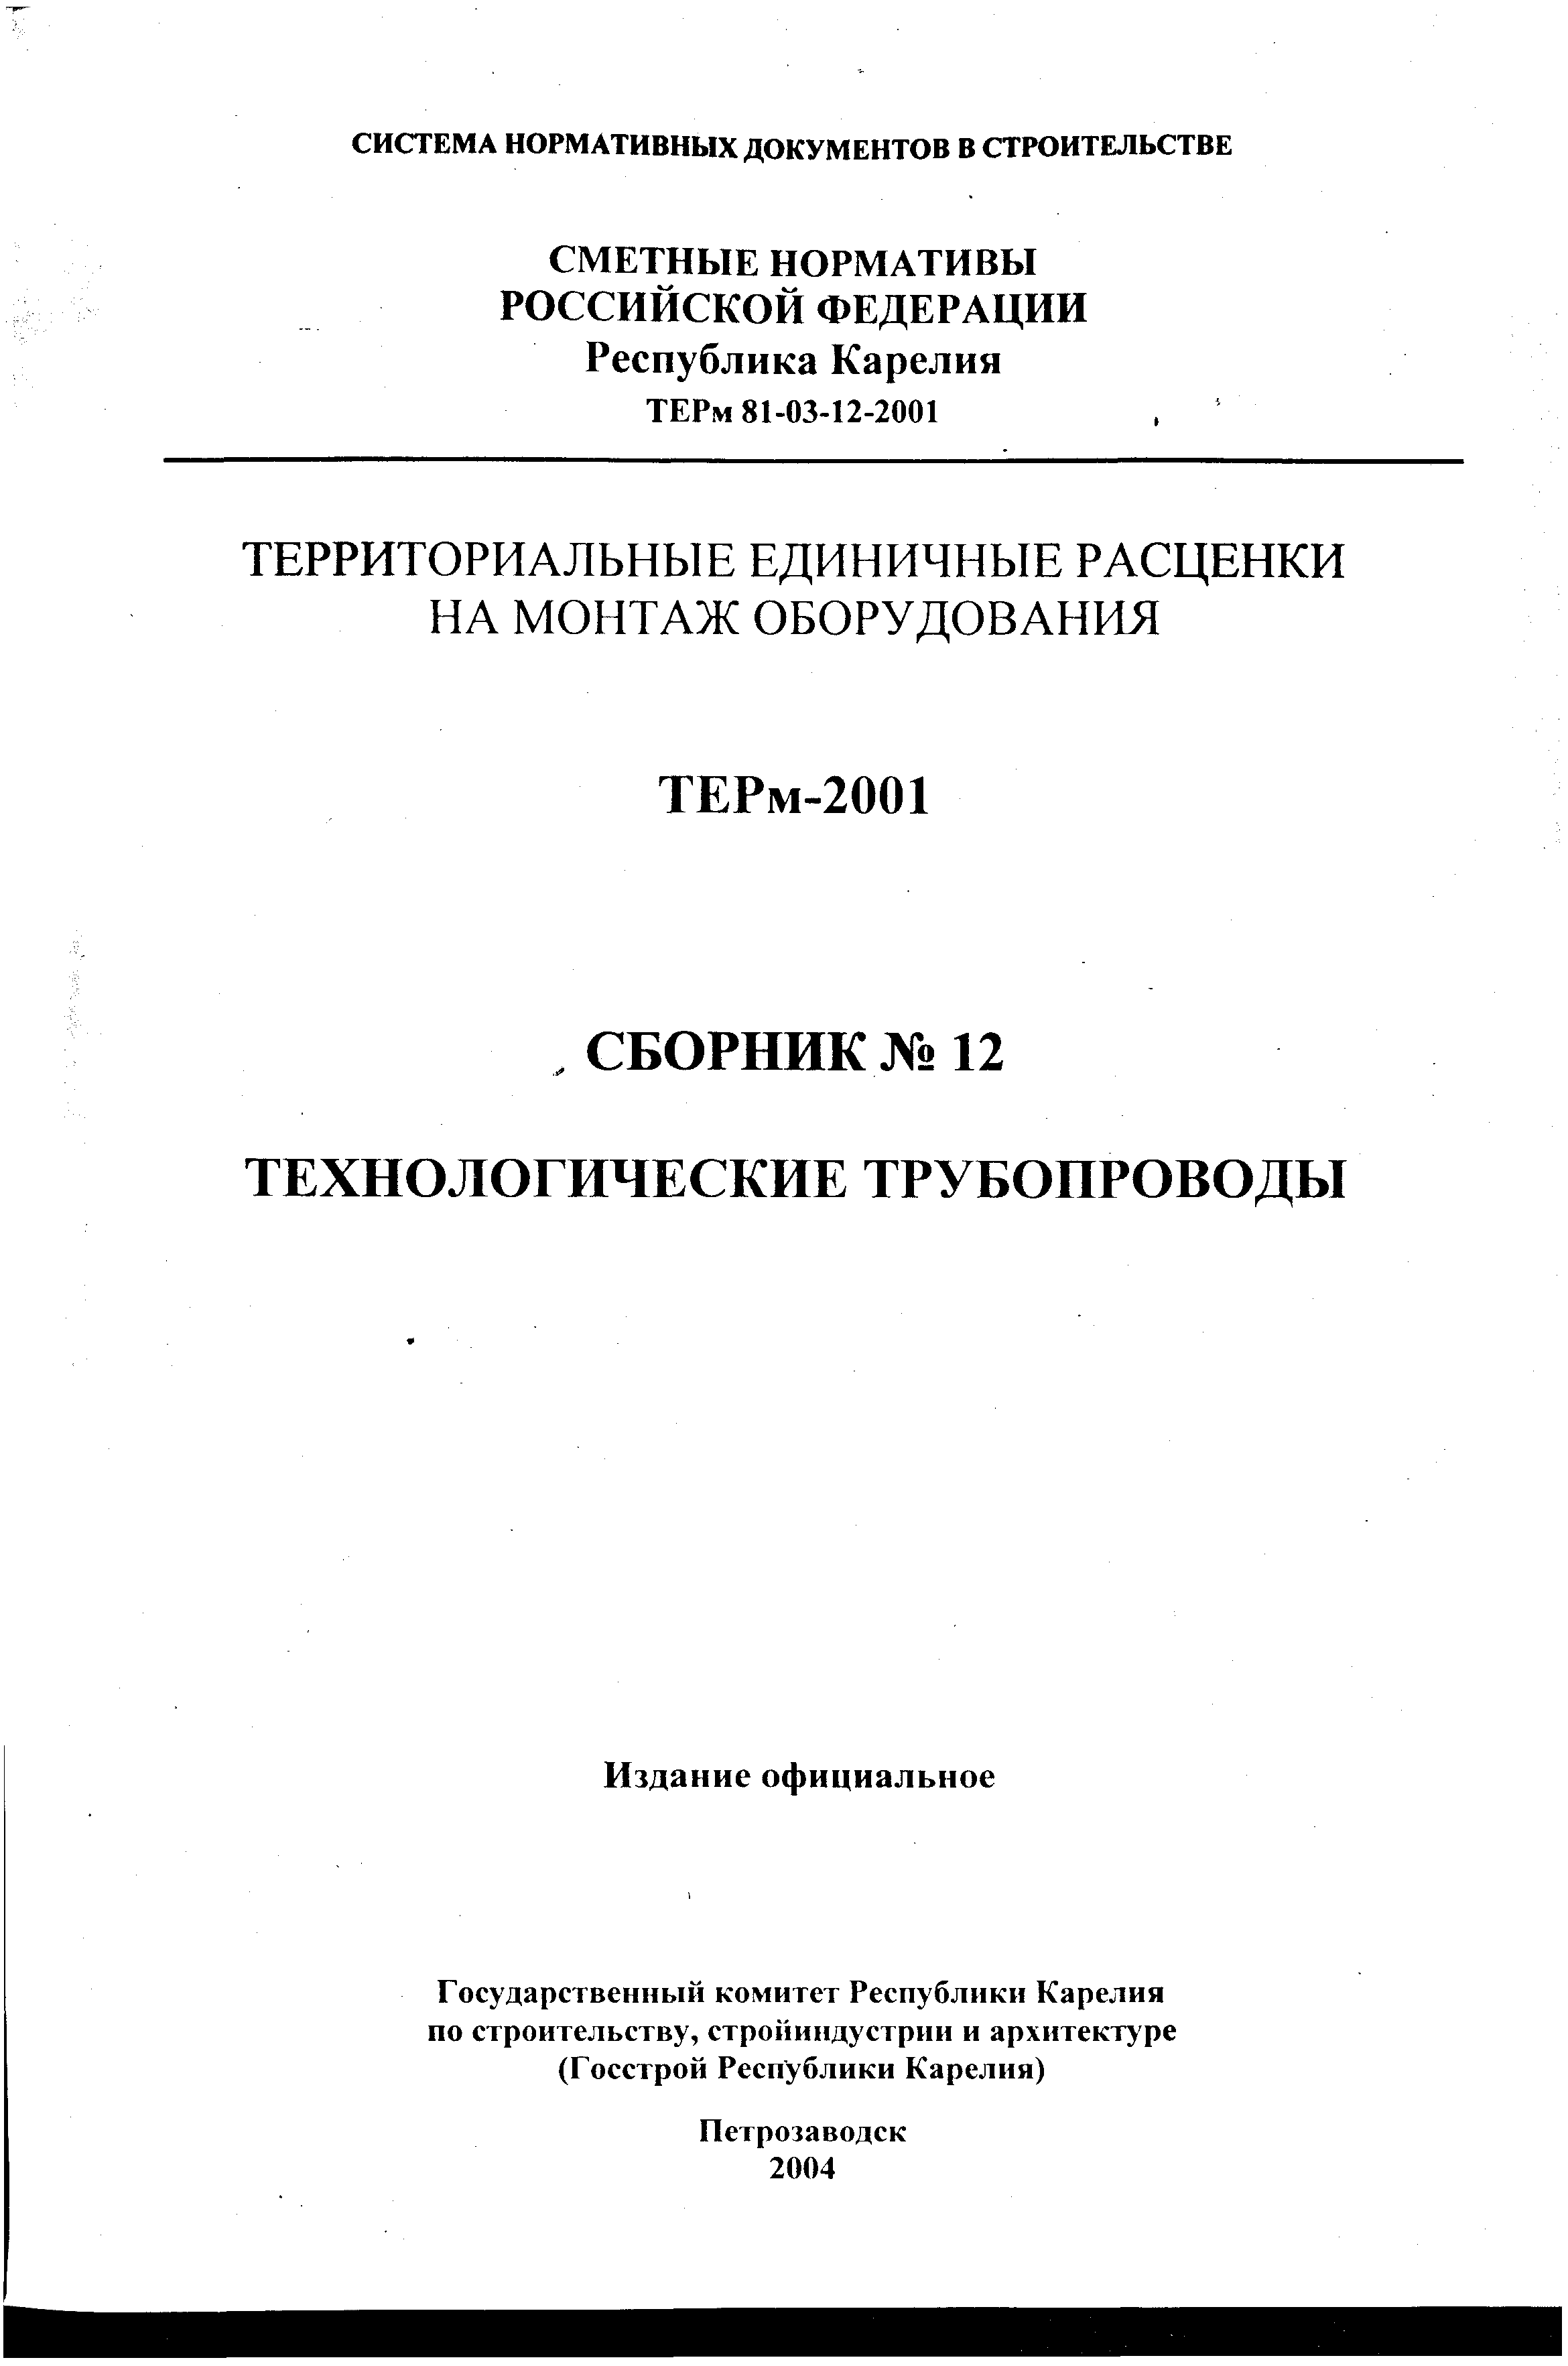 ТЕРм Республика Карелия 2001-12